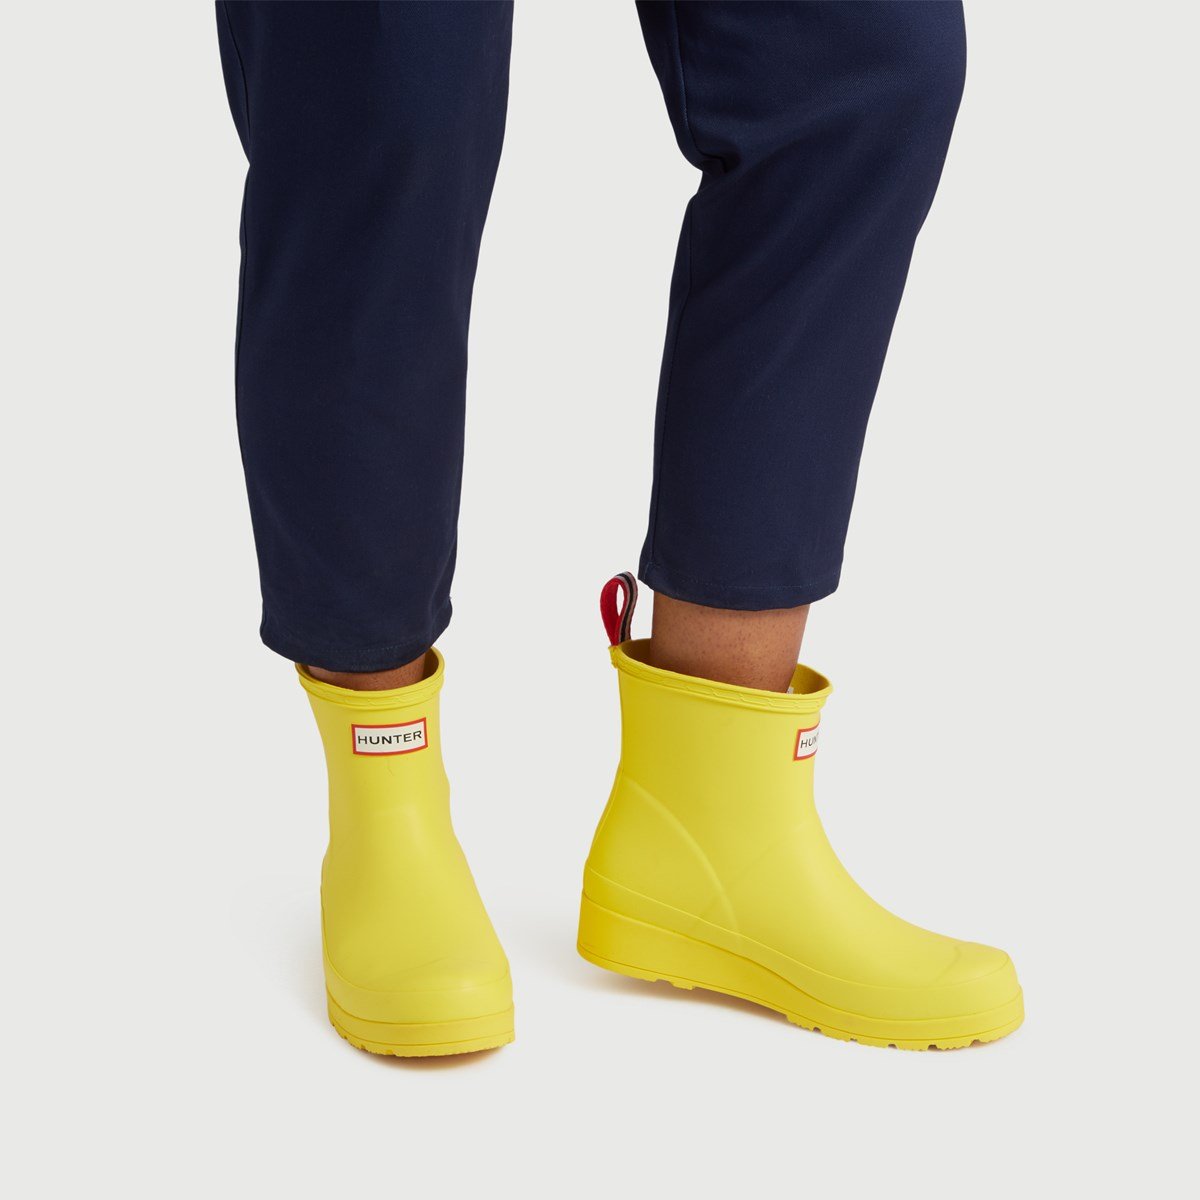 short yellow hunter rain boots